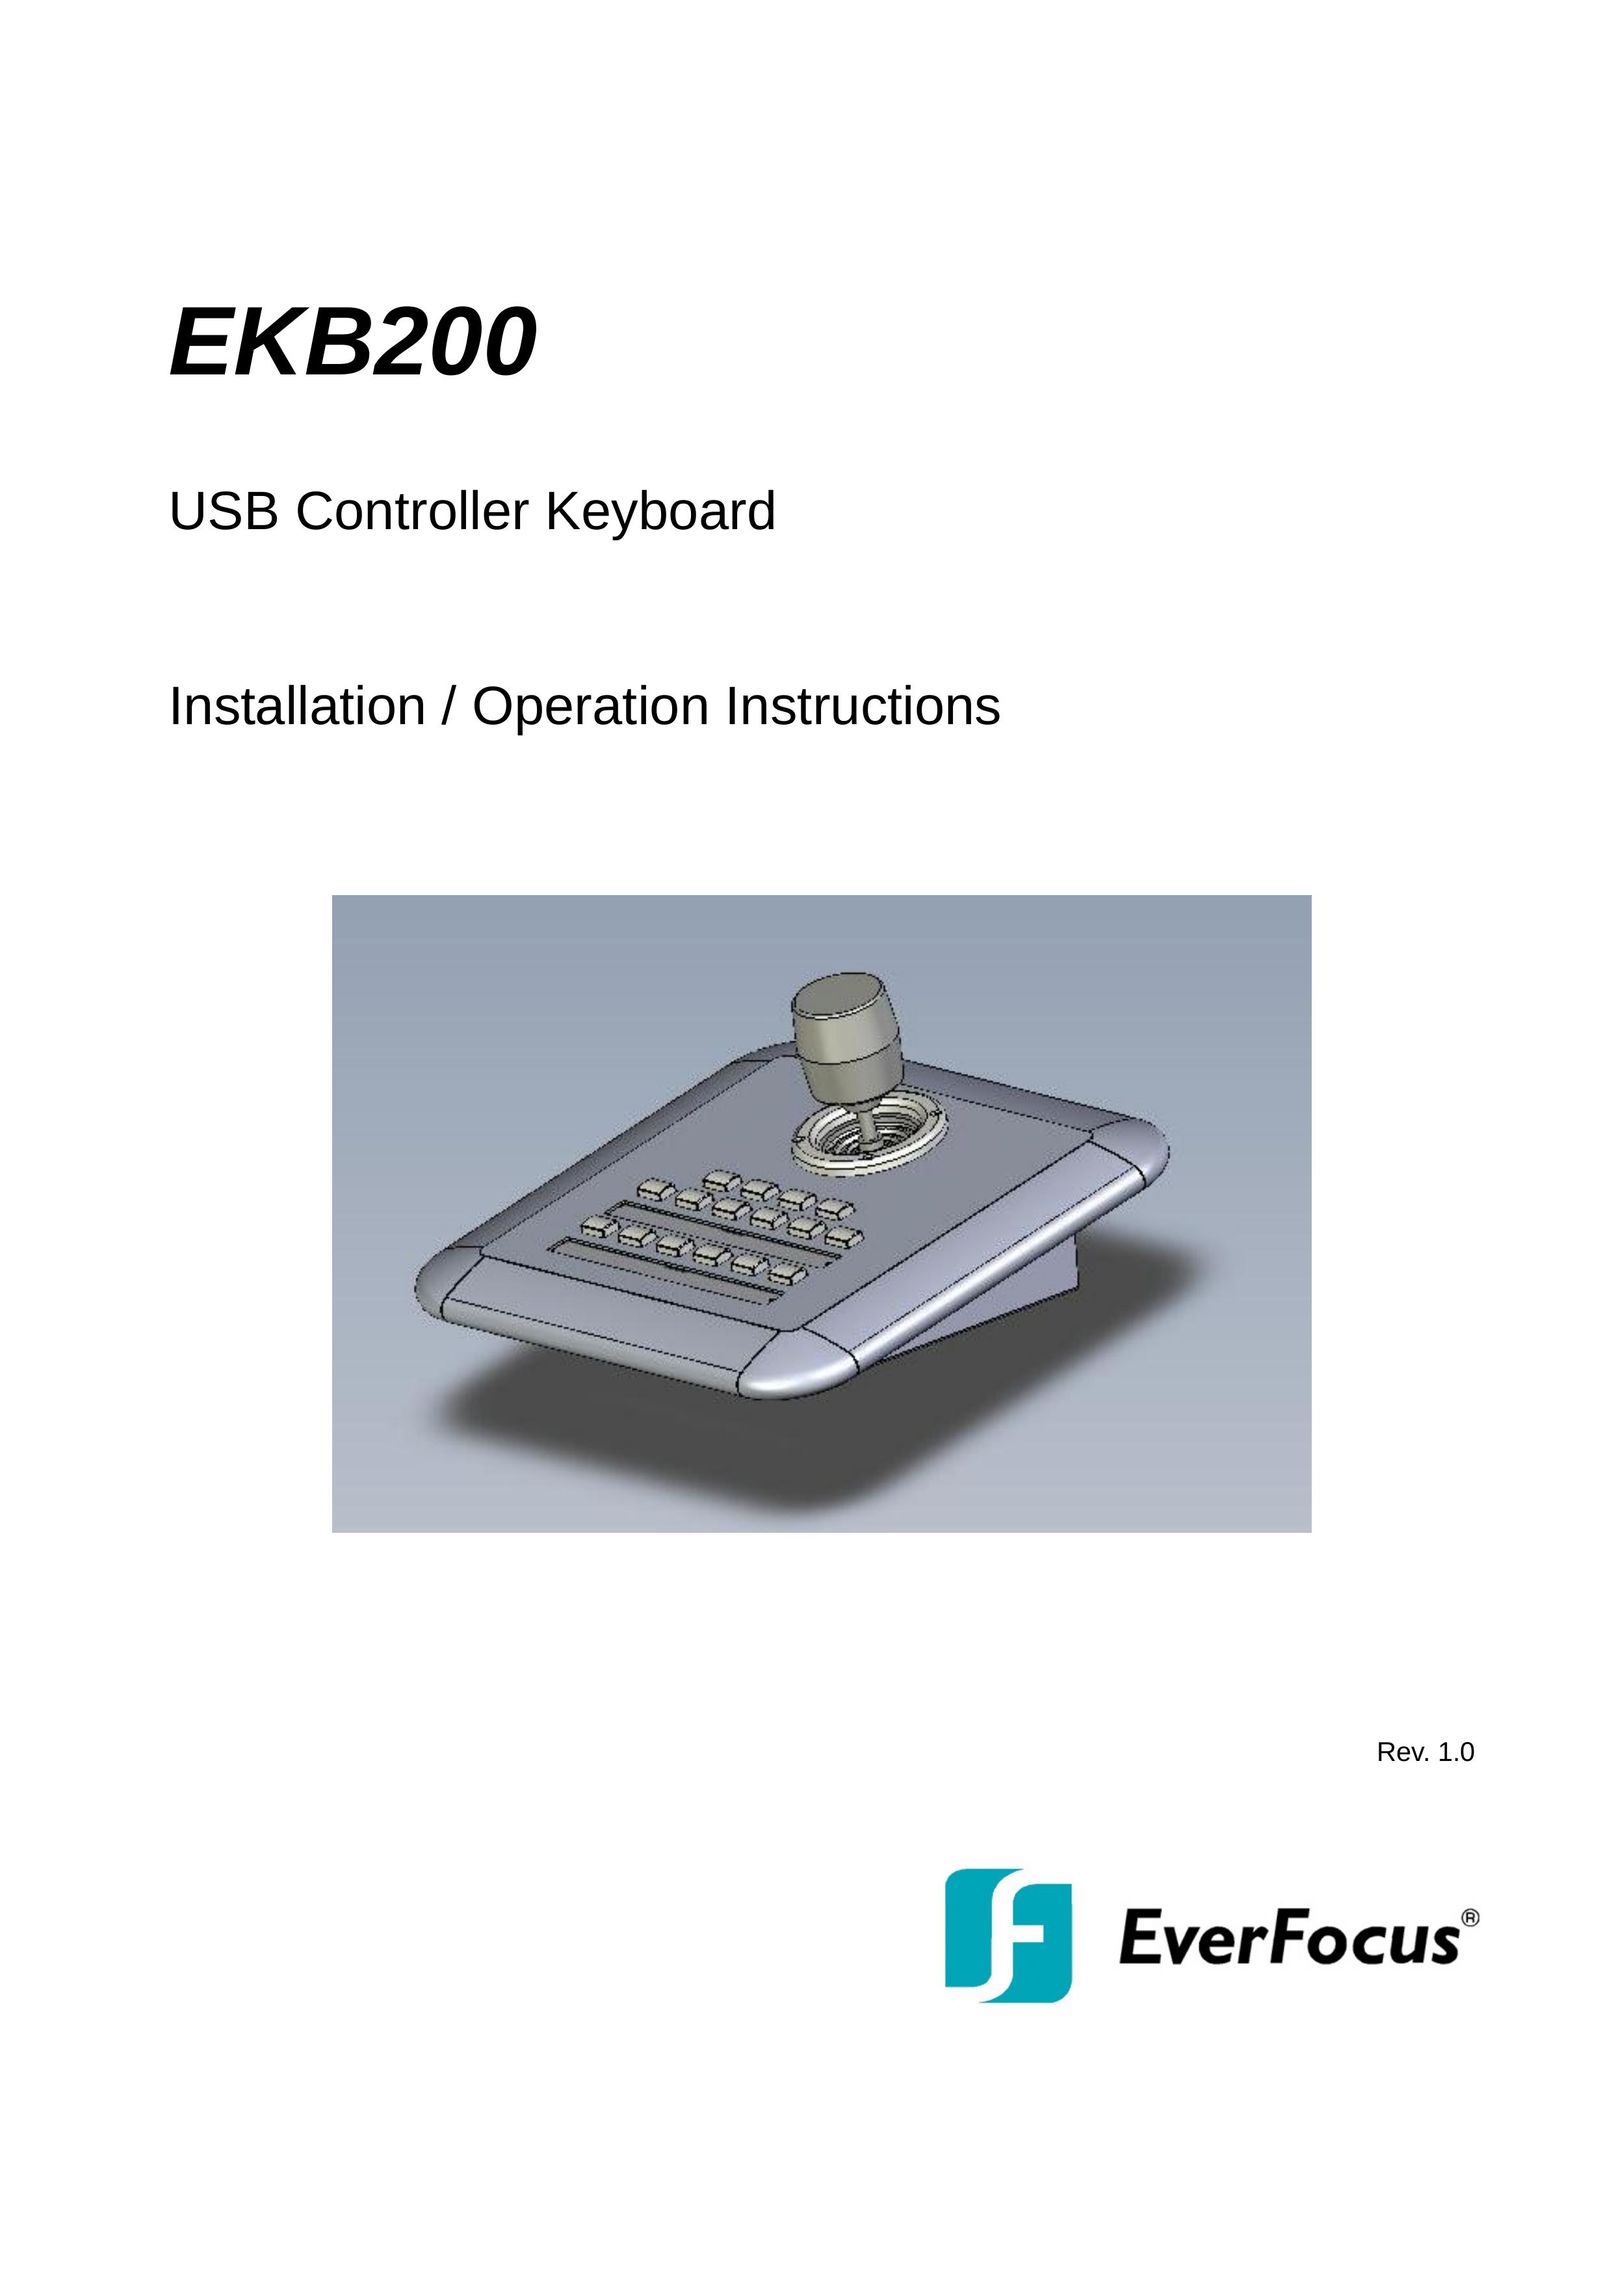 EverFocus EKB200 Video Game Keyboard User Manual